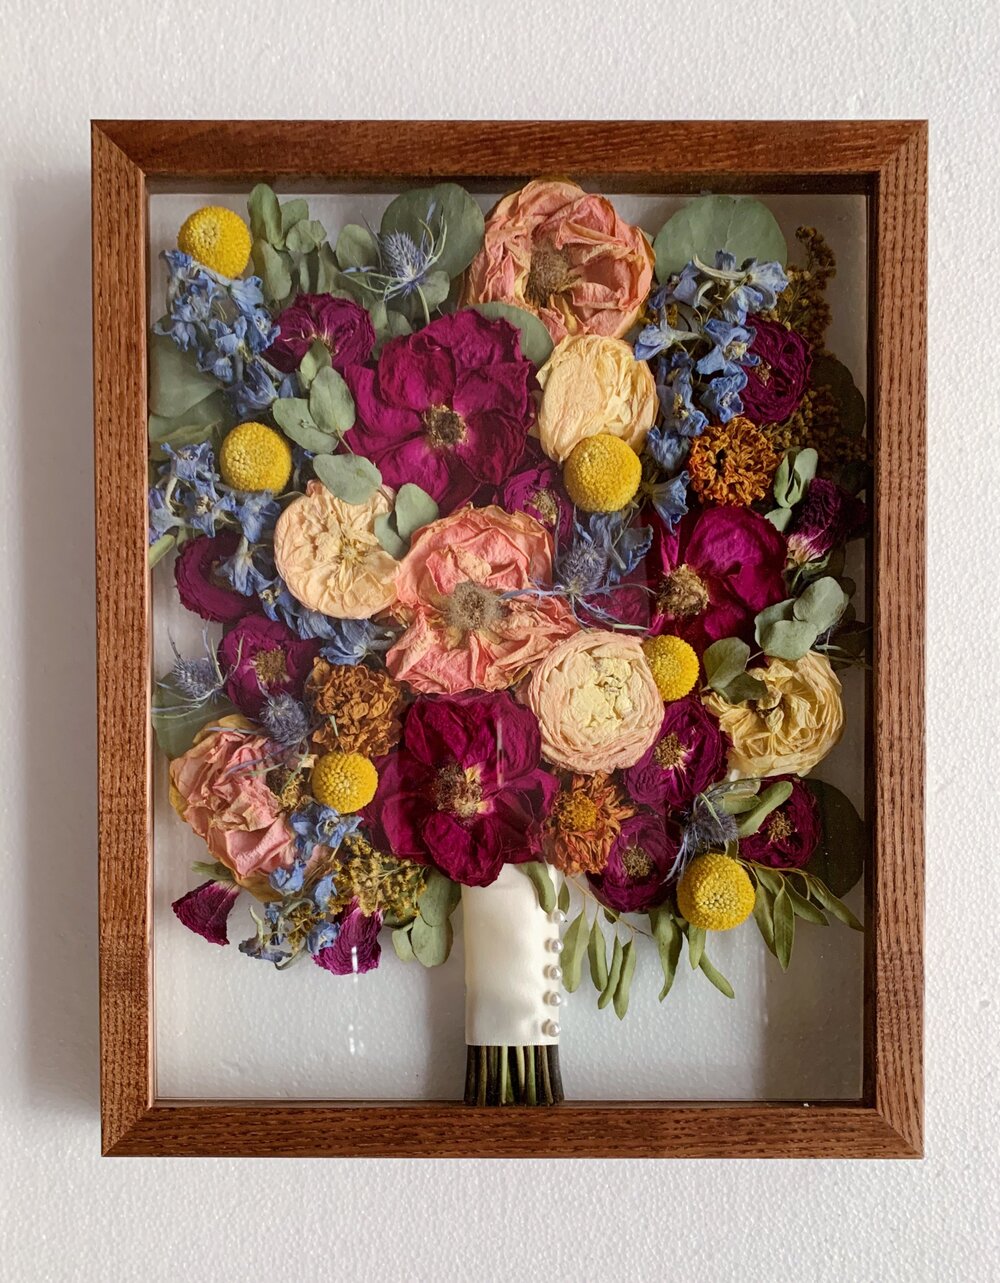 Dried flower wall art in floating frame 9 in x 5.5 in Presse